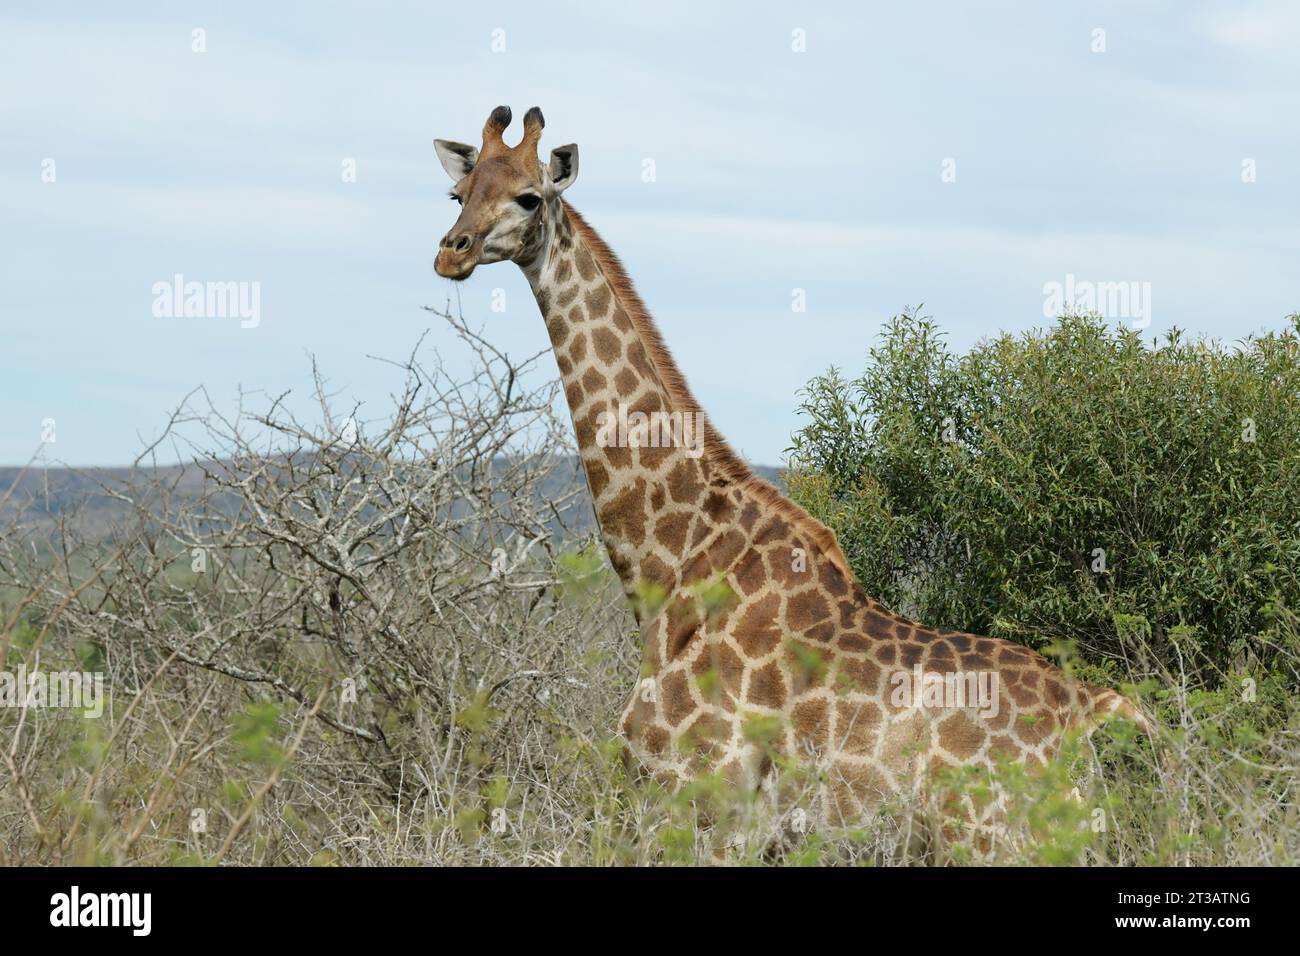 Africa animal, Giraffe, Giraffa camelopardalis, in natural terrain, Hluhluwe Umfolozi nature park, South Africa, safari destination, African wildlife Stock Photo